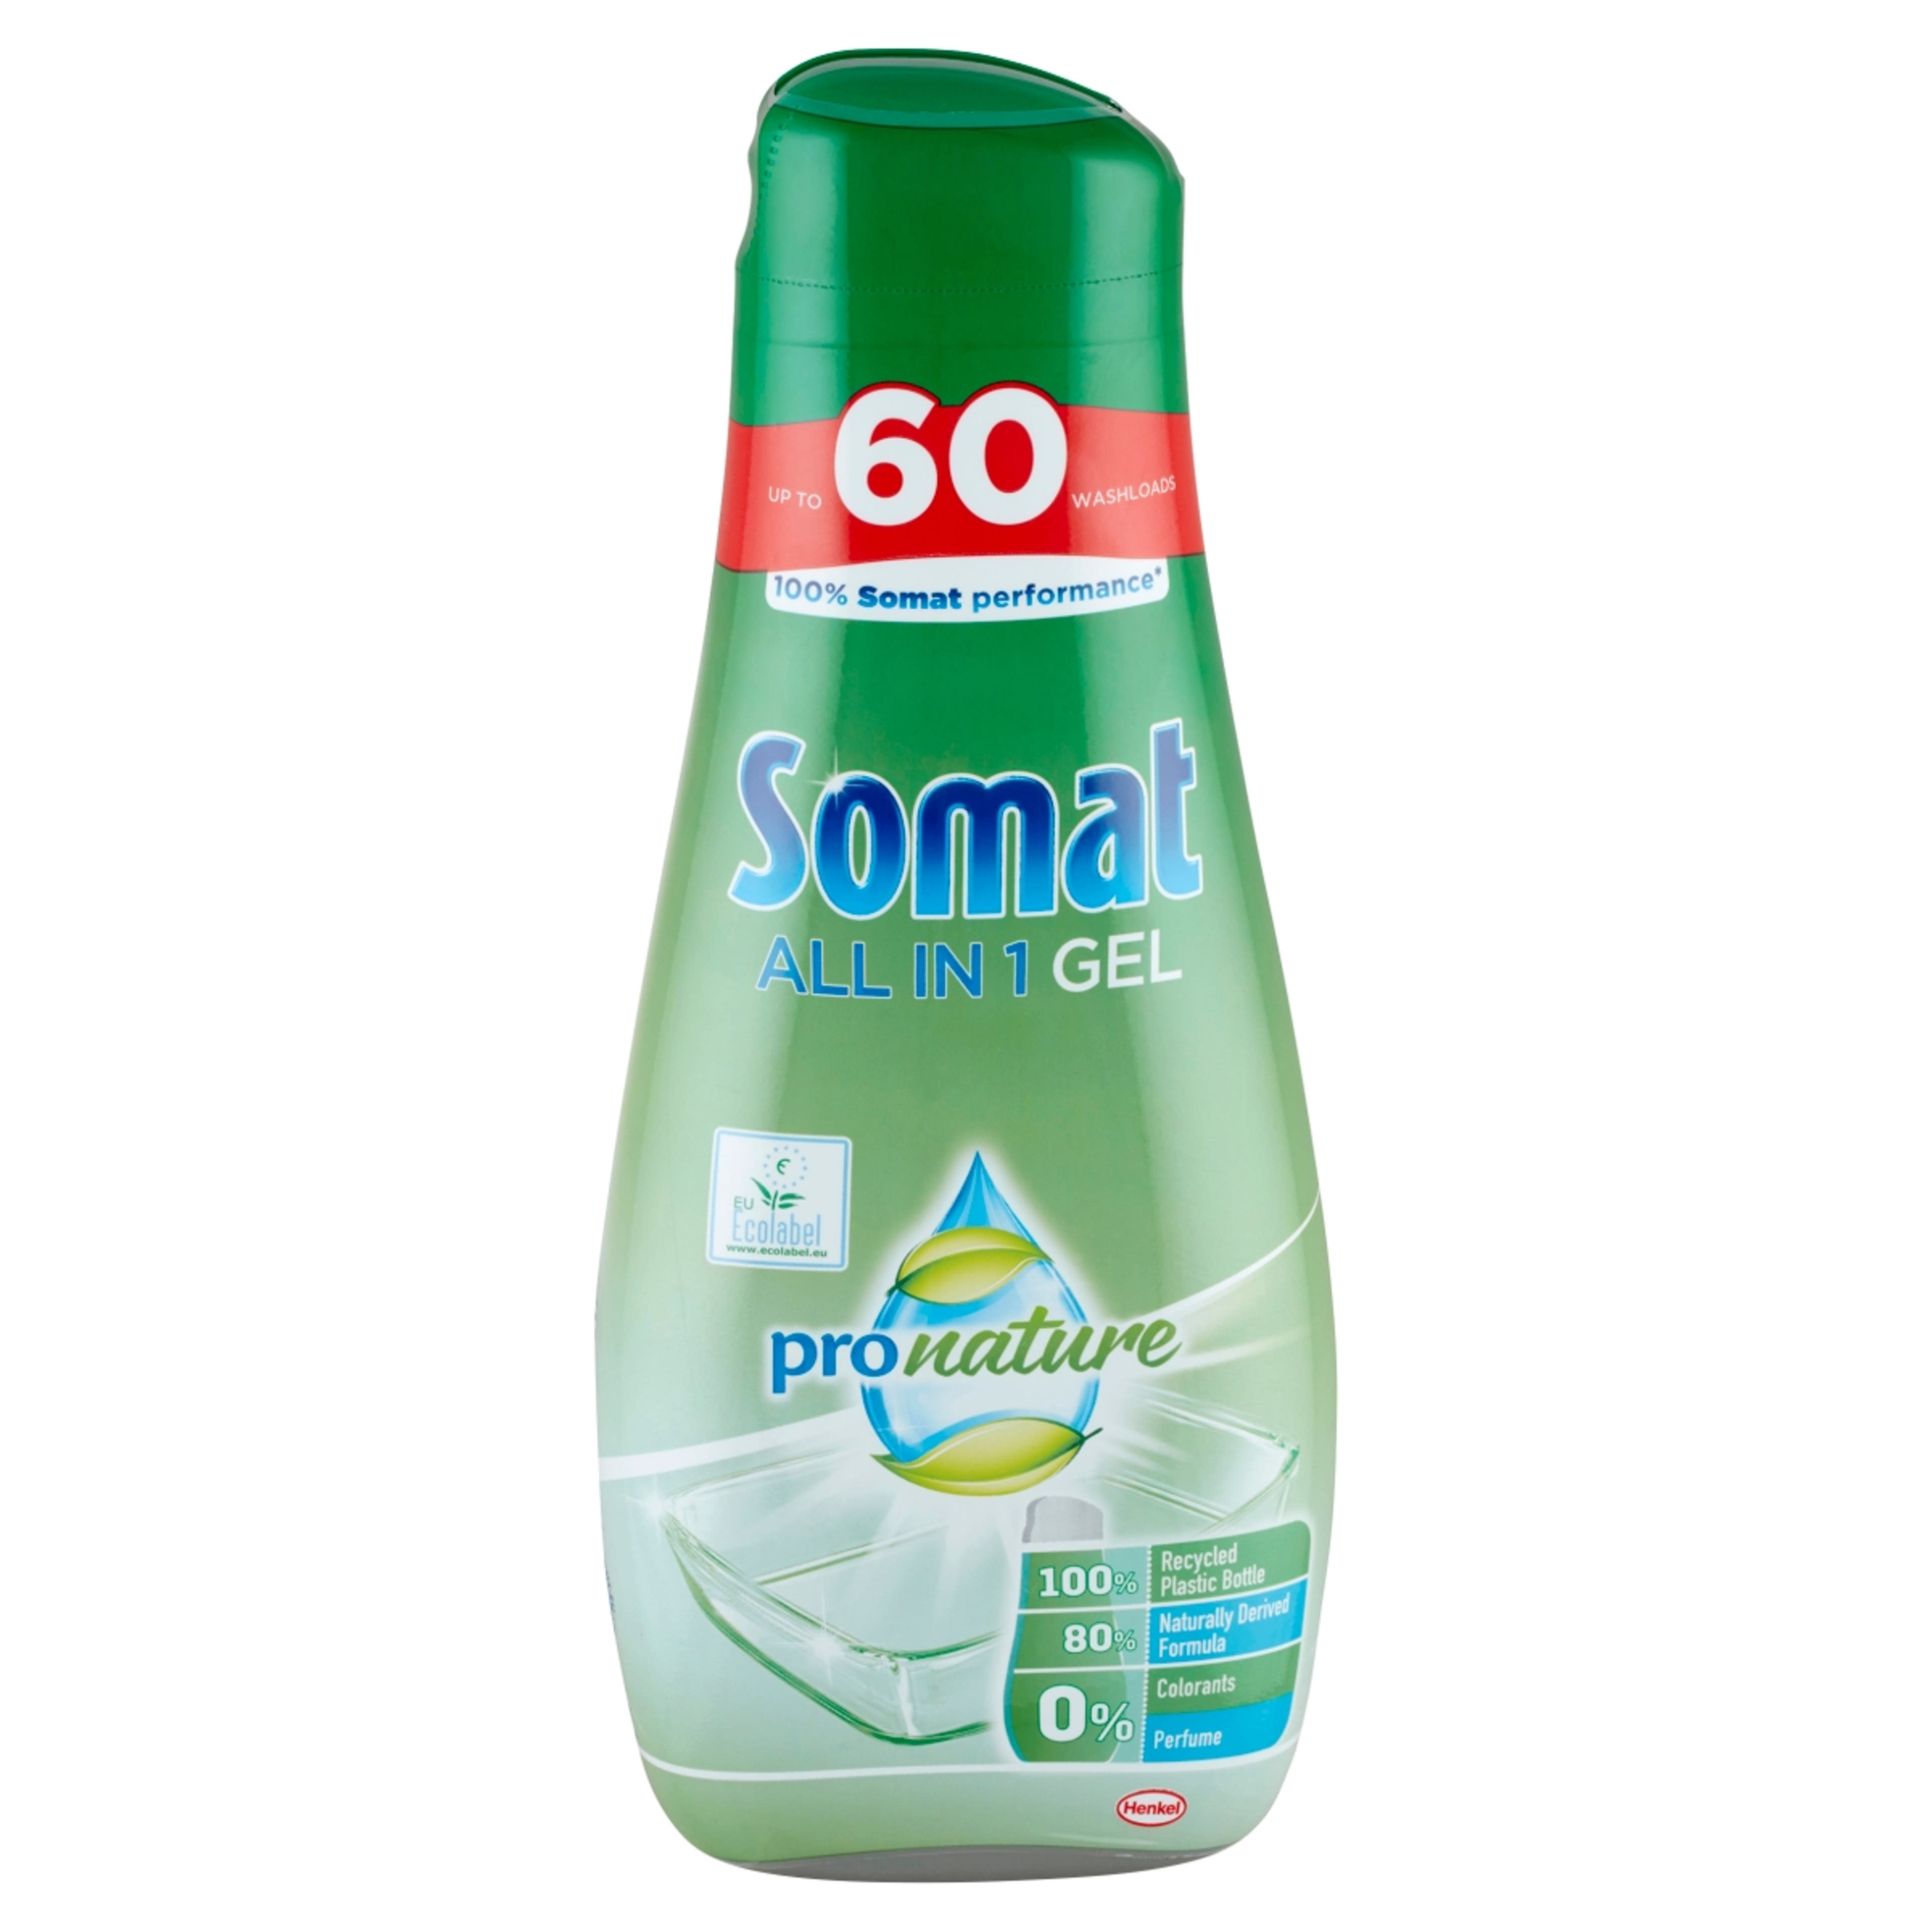 Somat All in 1 pronature mosogatógél 60WL - 960 ml-2